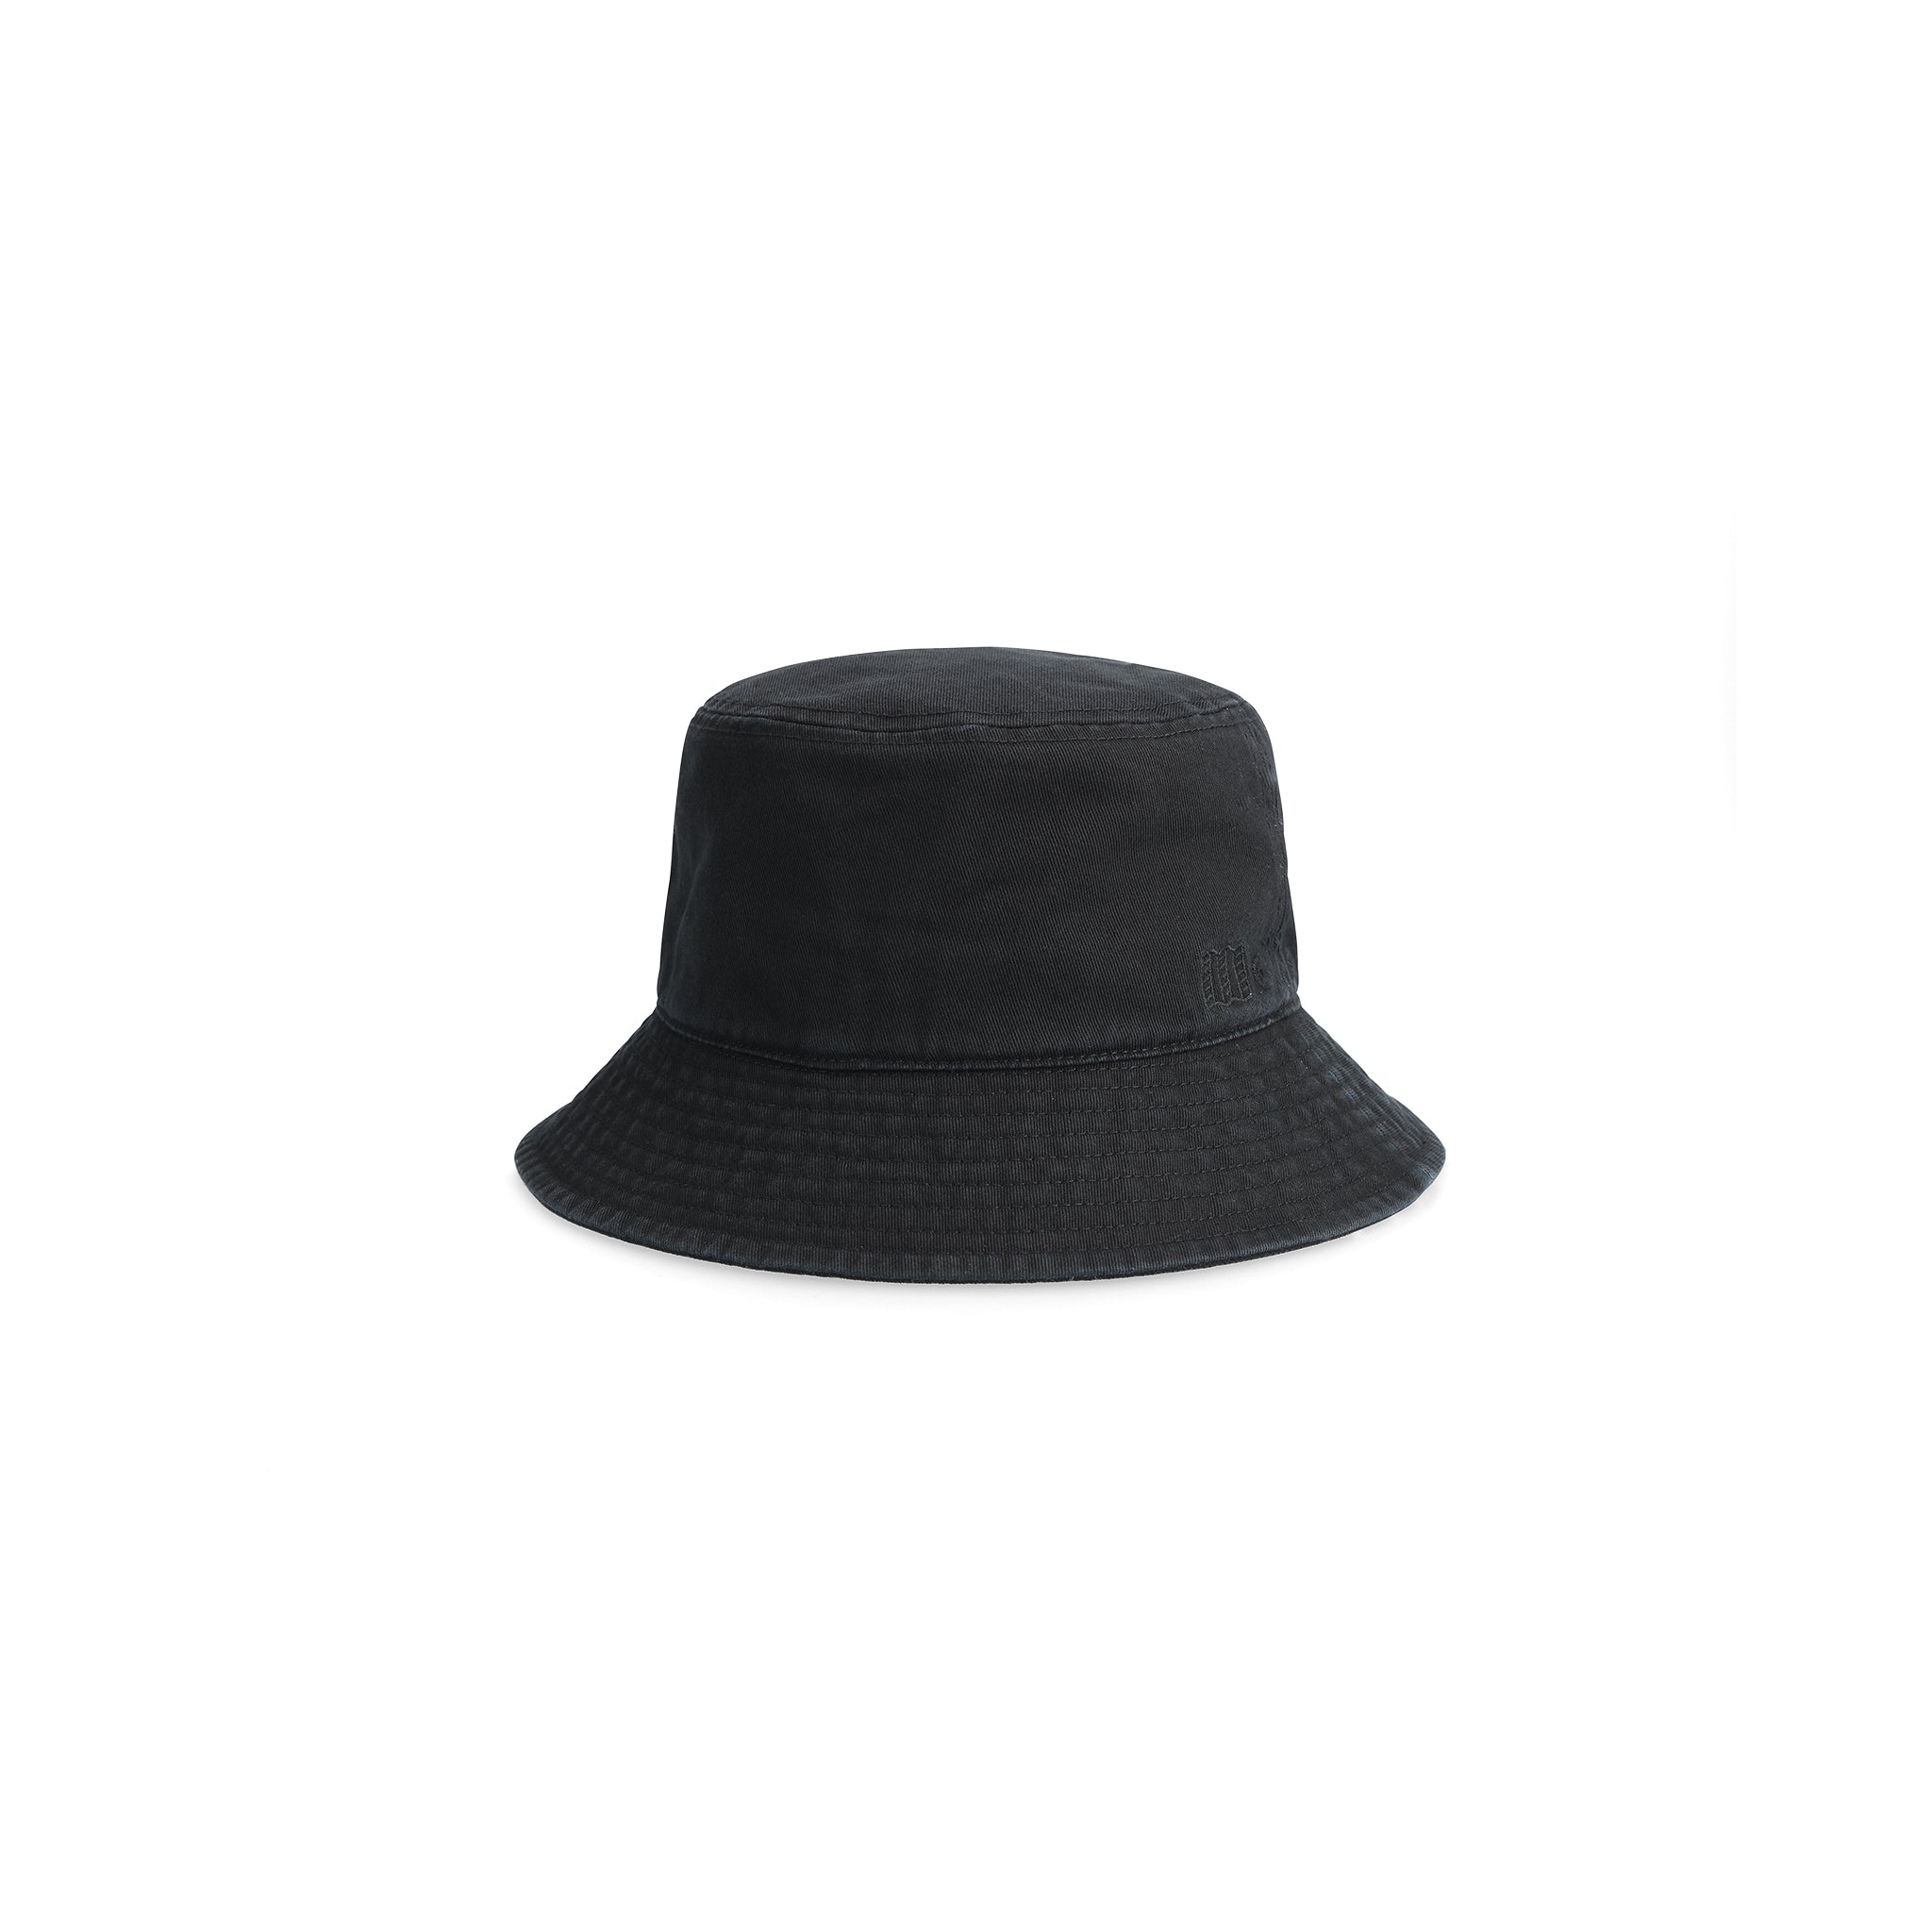 Front View of Topo Designs Dirt Bucket Hat in "Black"